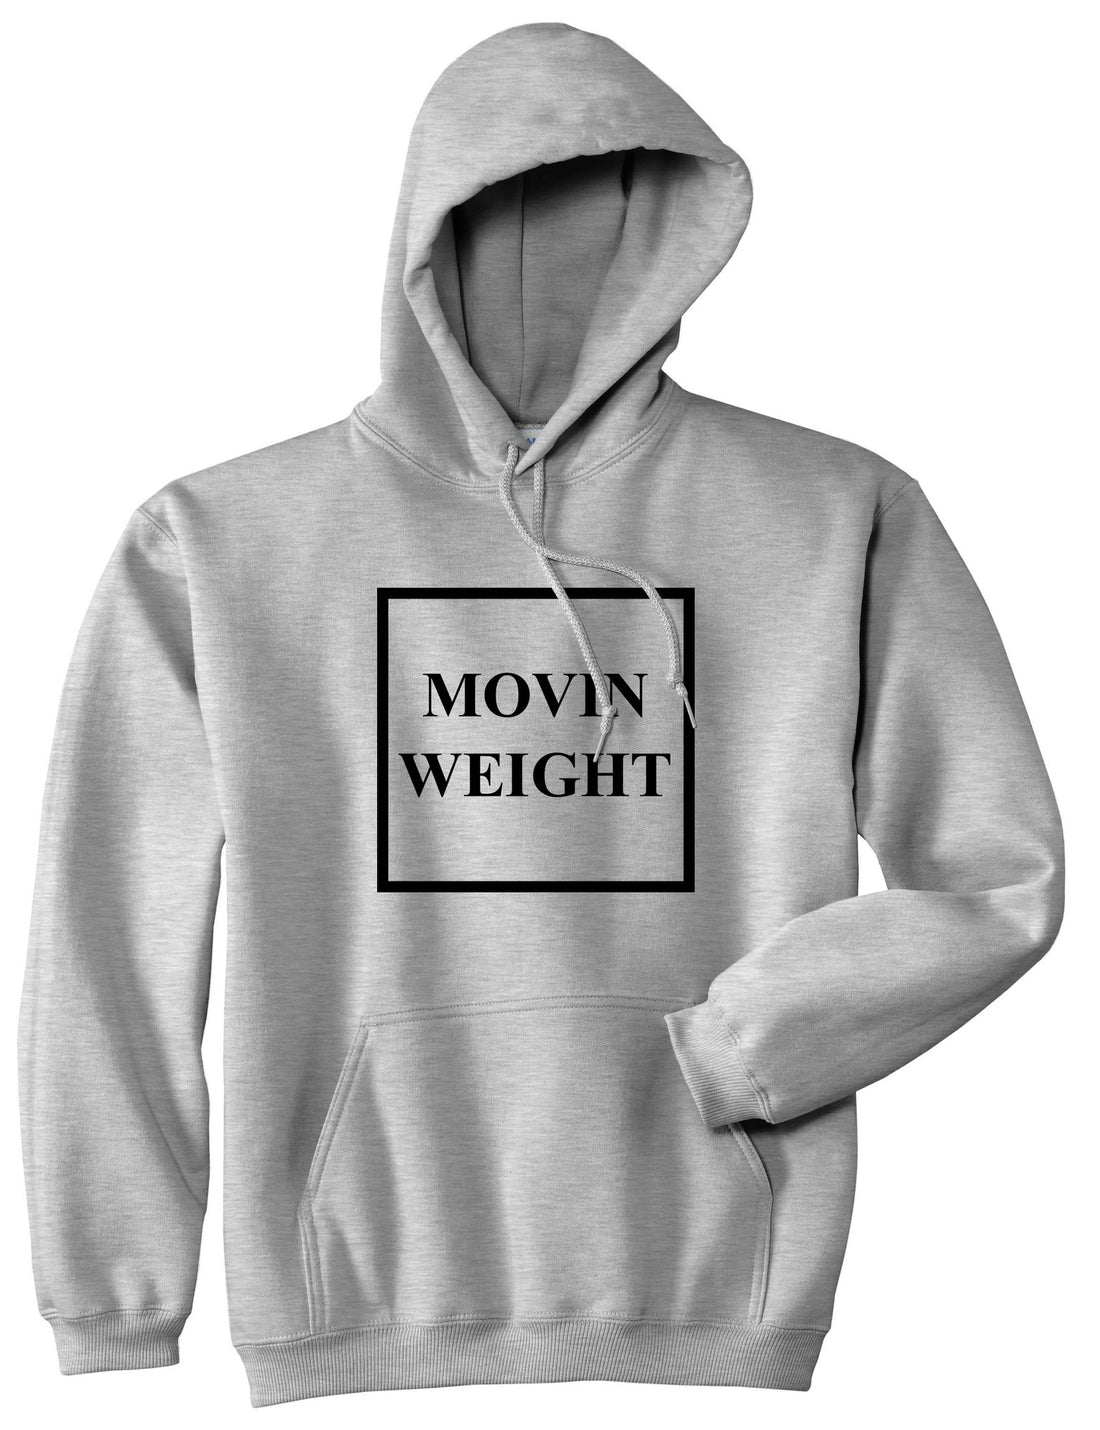 Movin Weight Hustler Boys Kids Pullover Hoodie Hoody in Grey by Kings Of NY